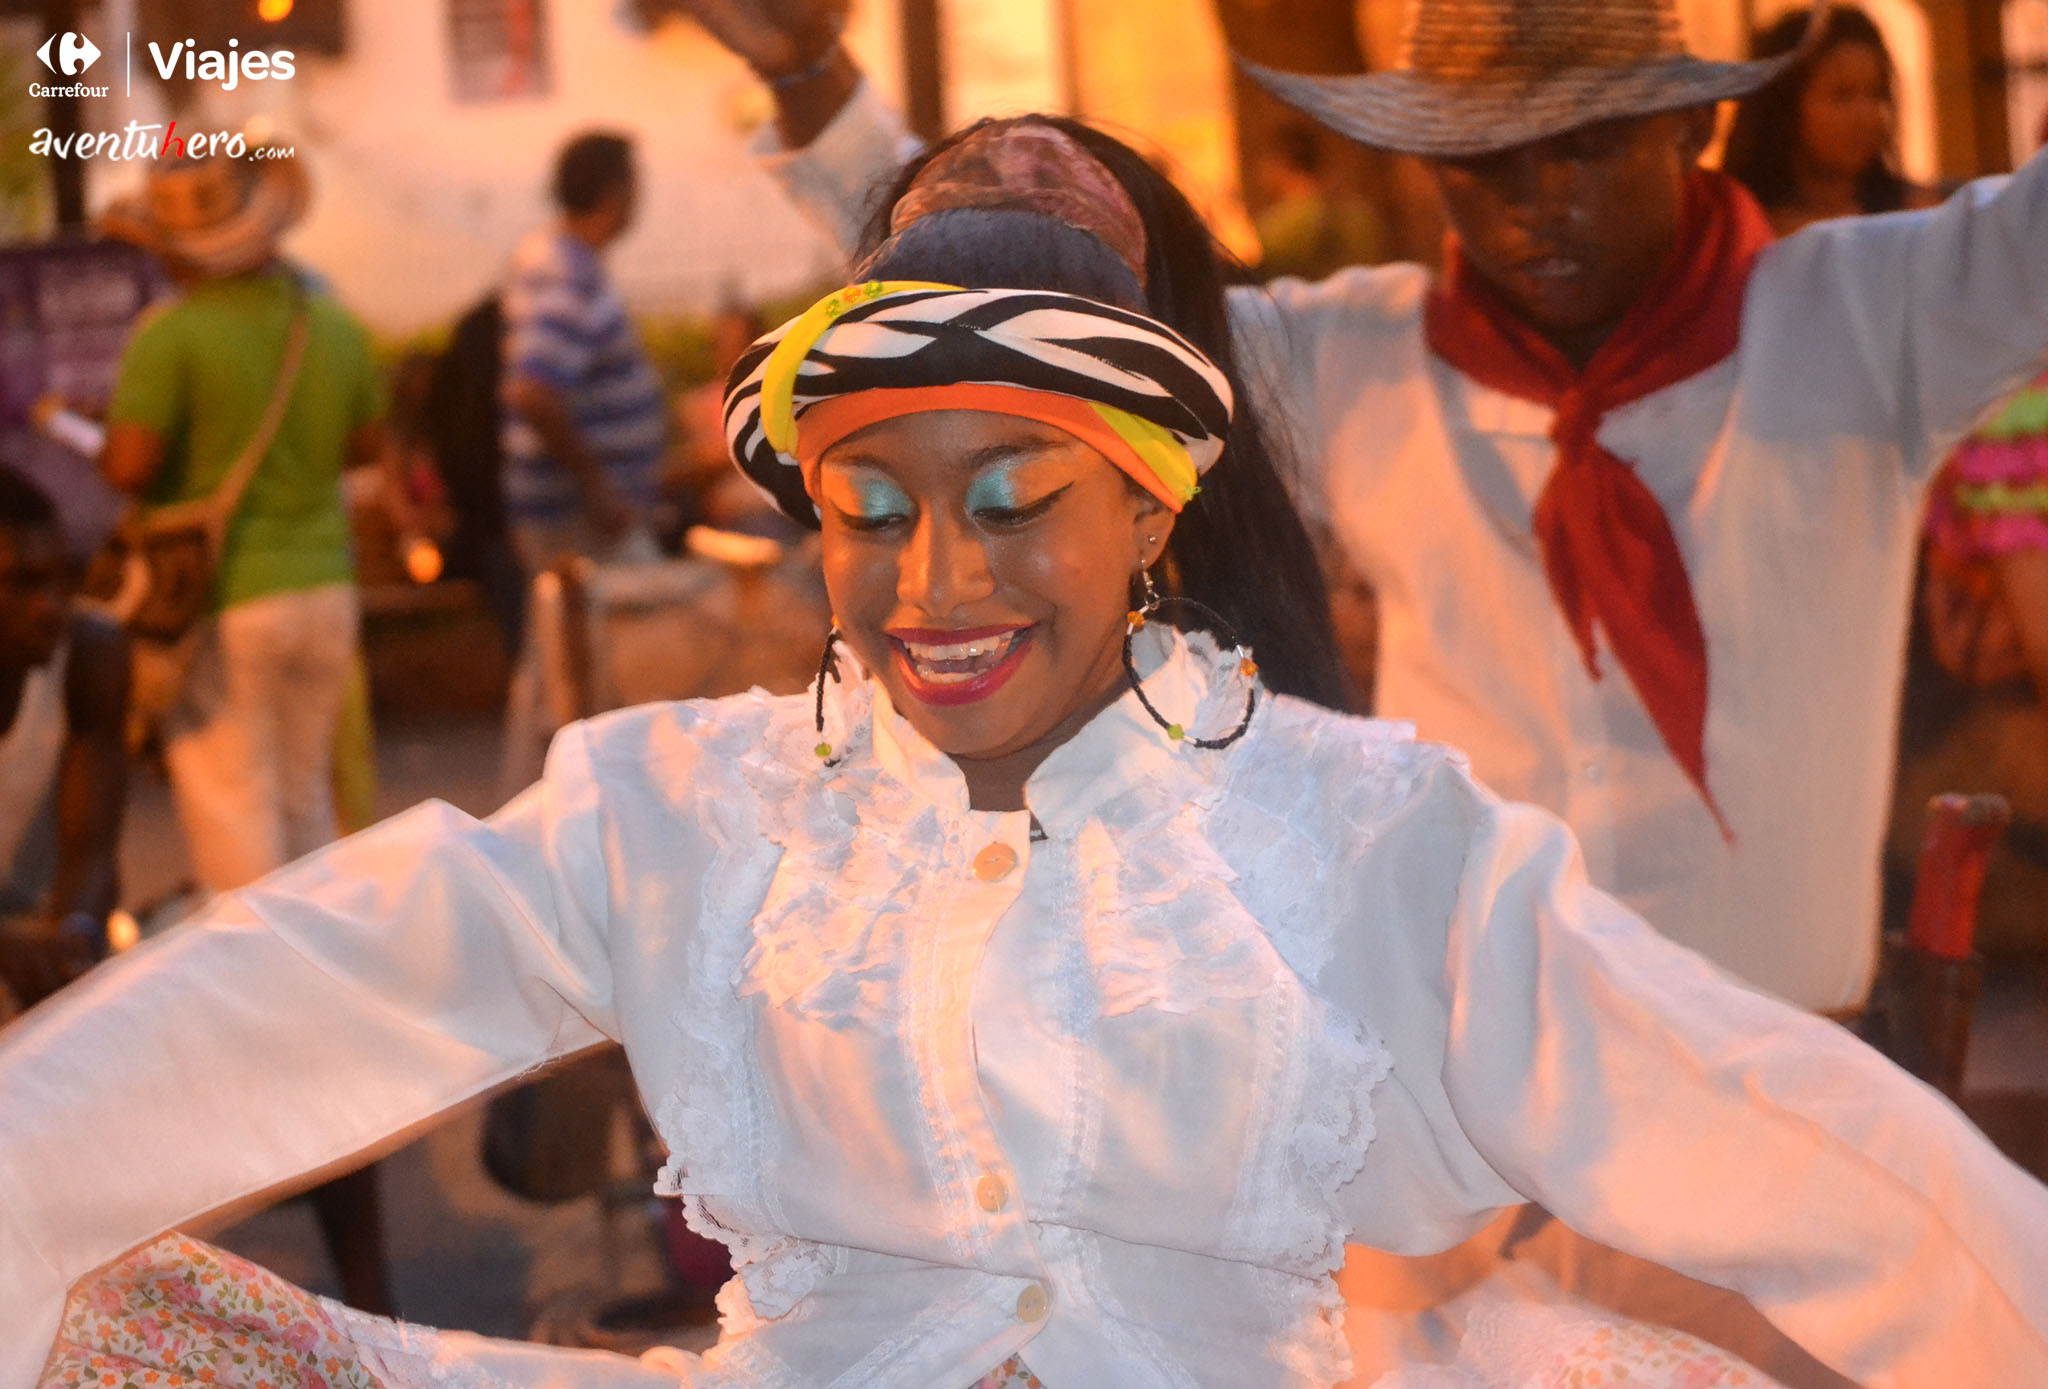 Baile típico de Cartagena